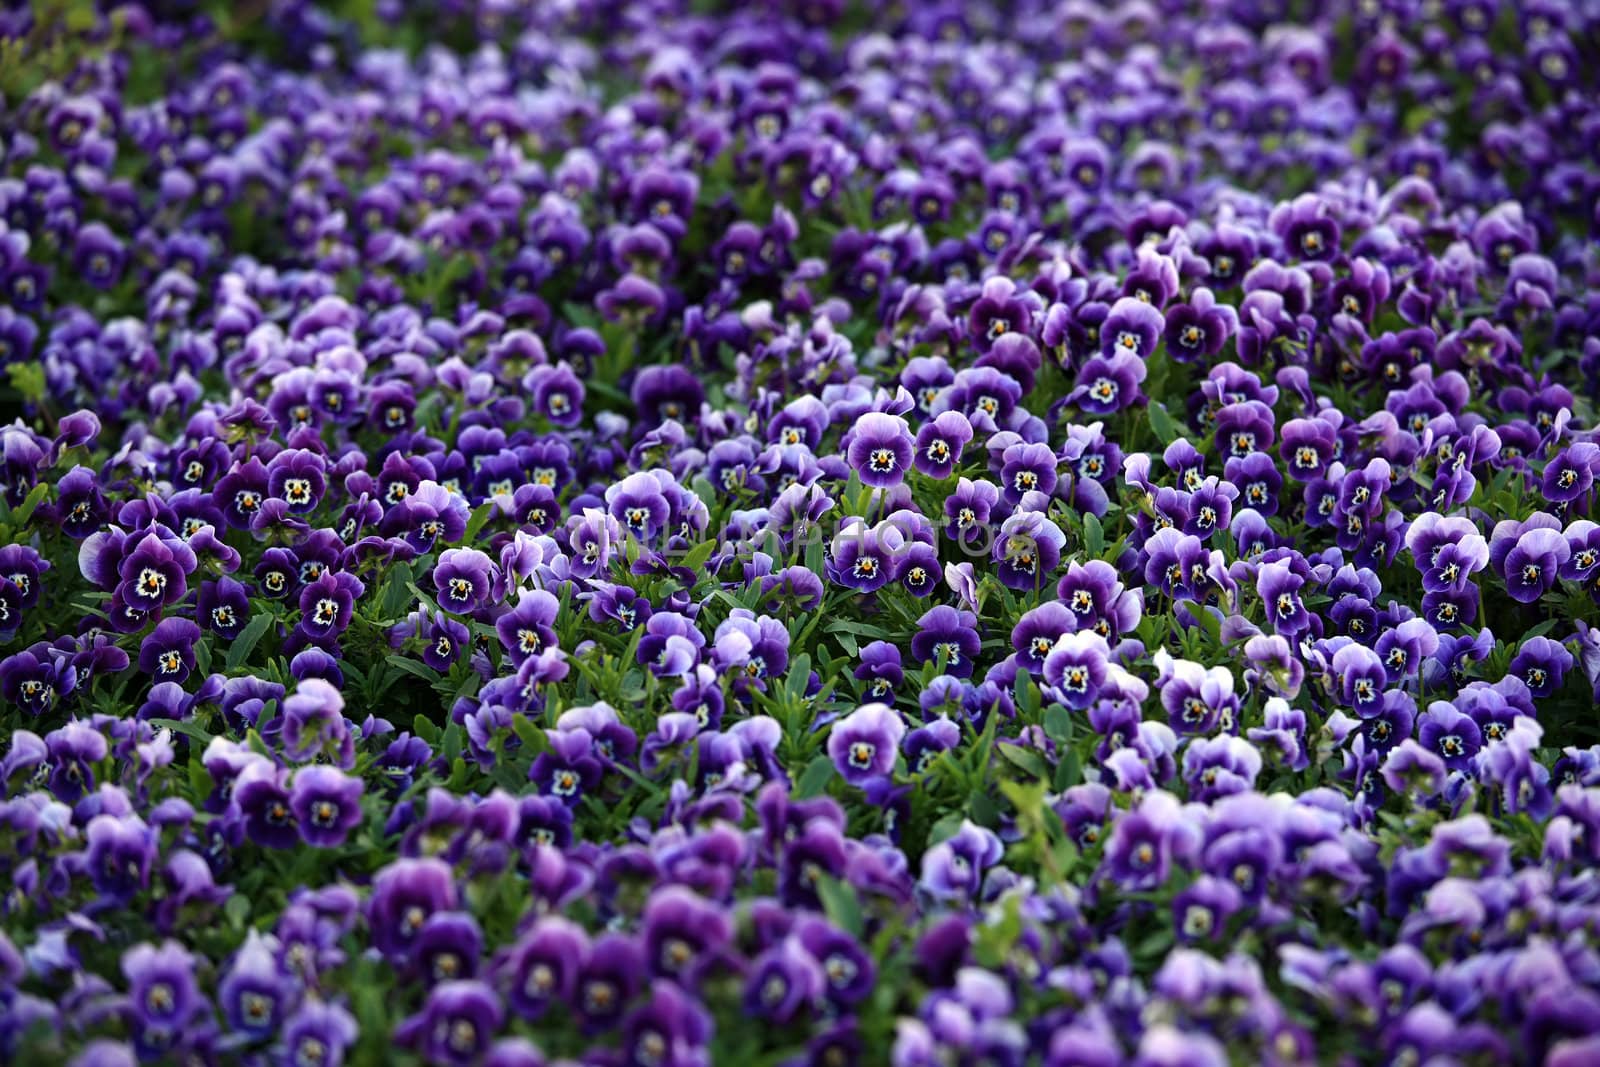 Violet Viola Flowers by monner